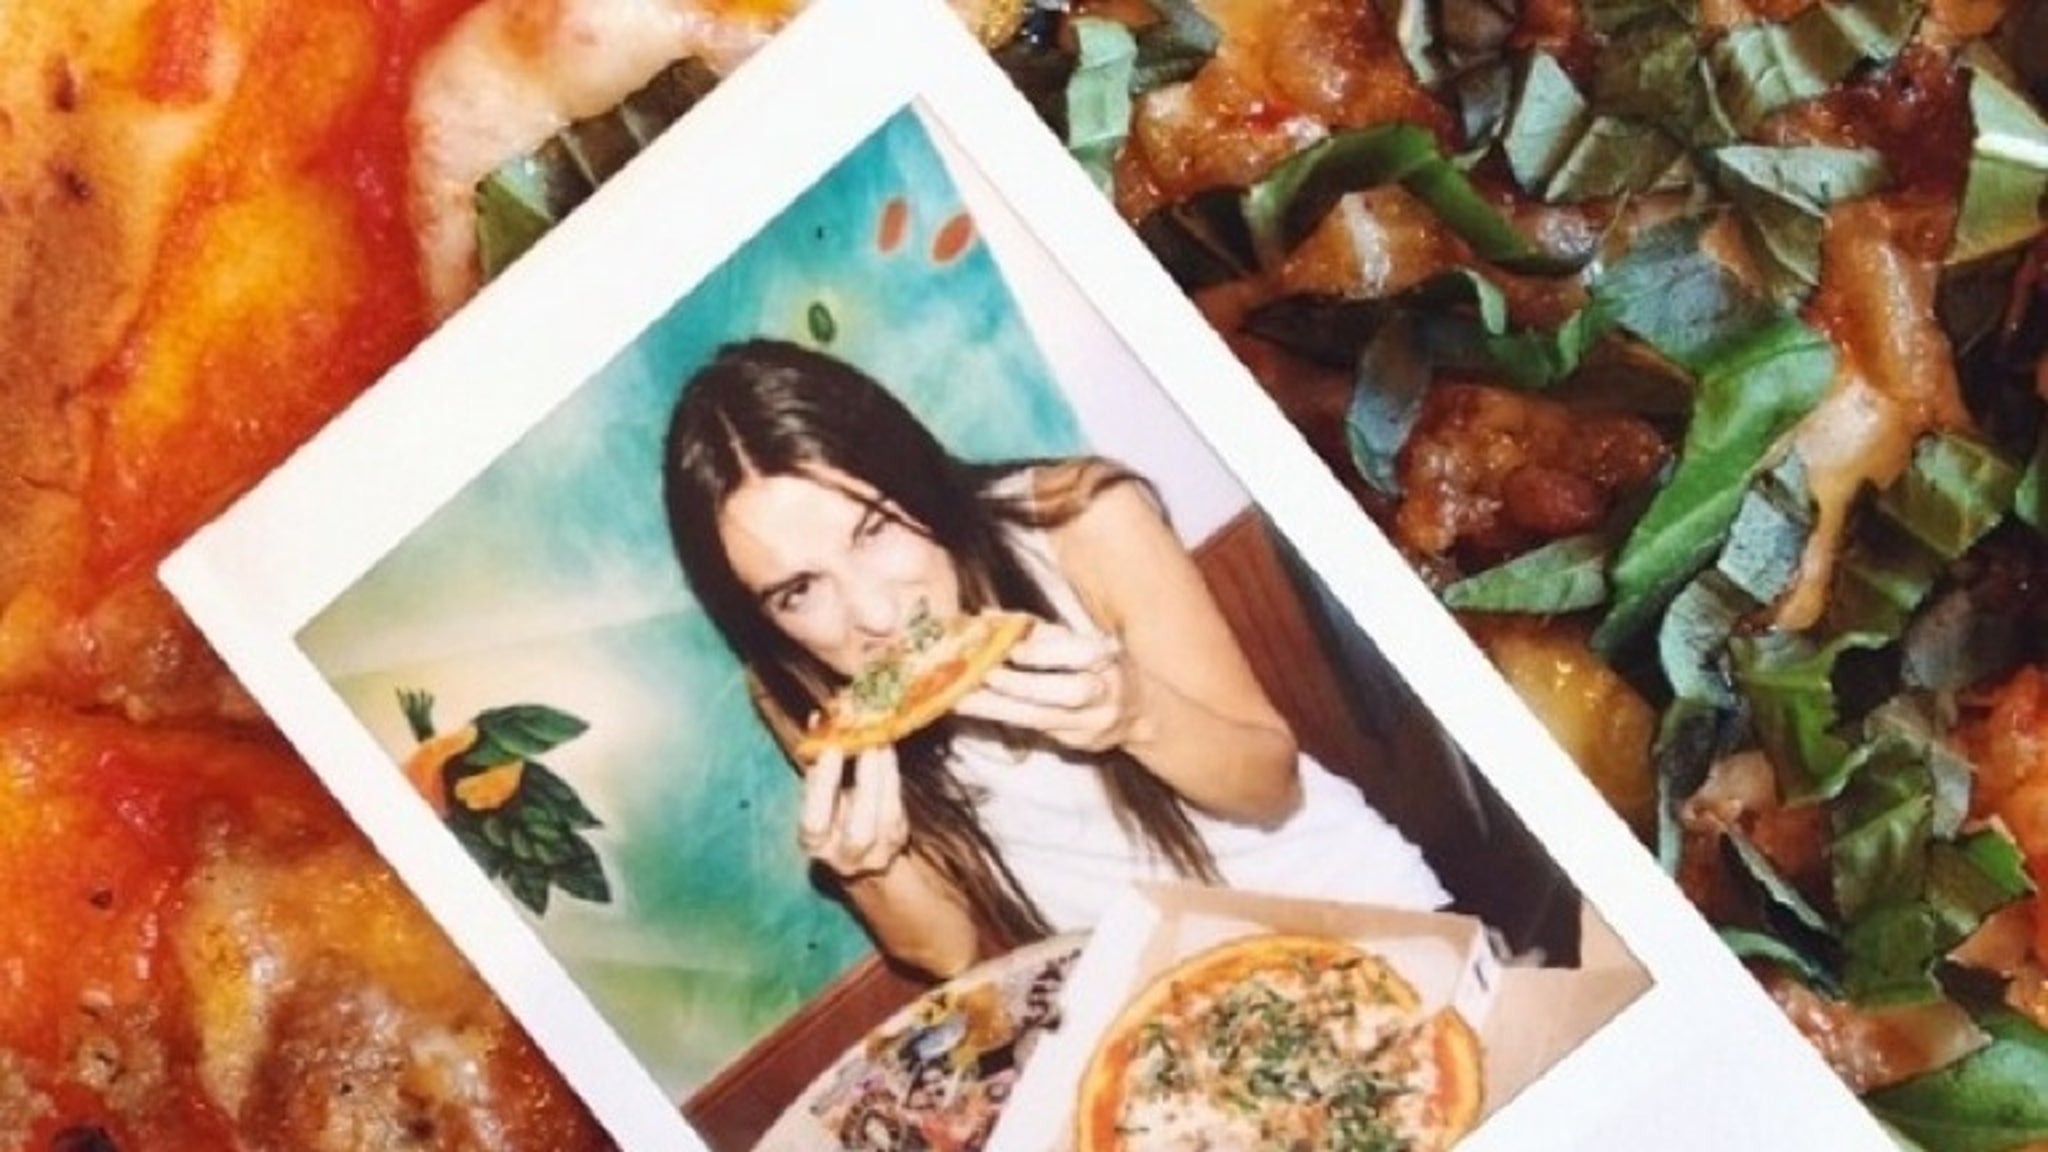 Hot Girls Eating Pizza Instagrams Tastiest Account